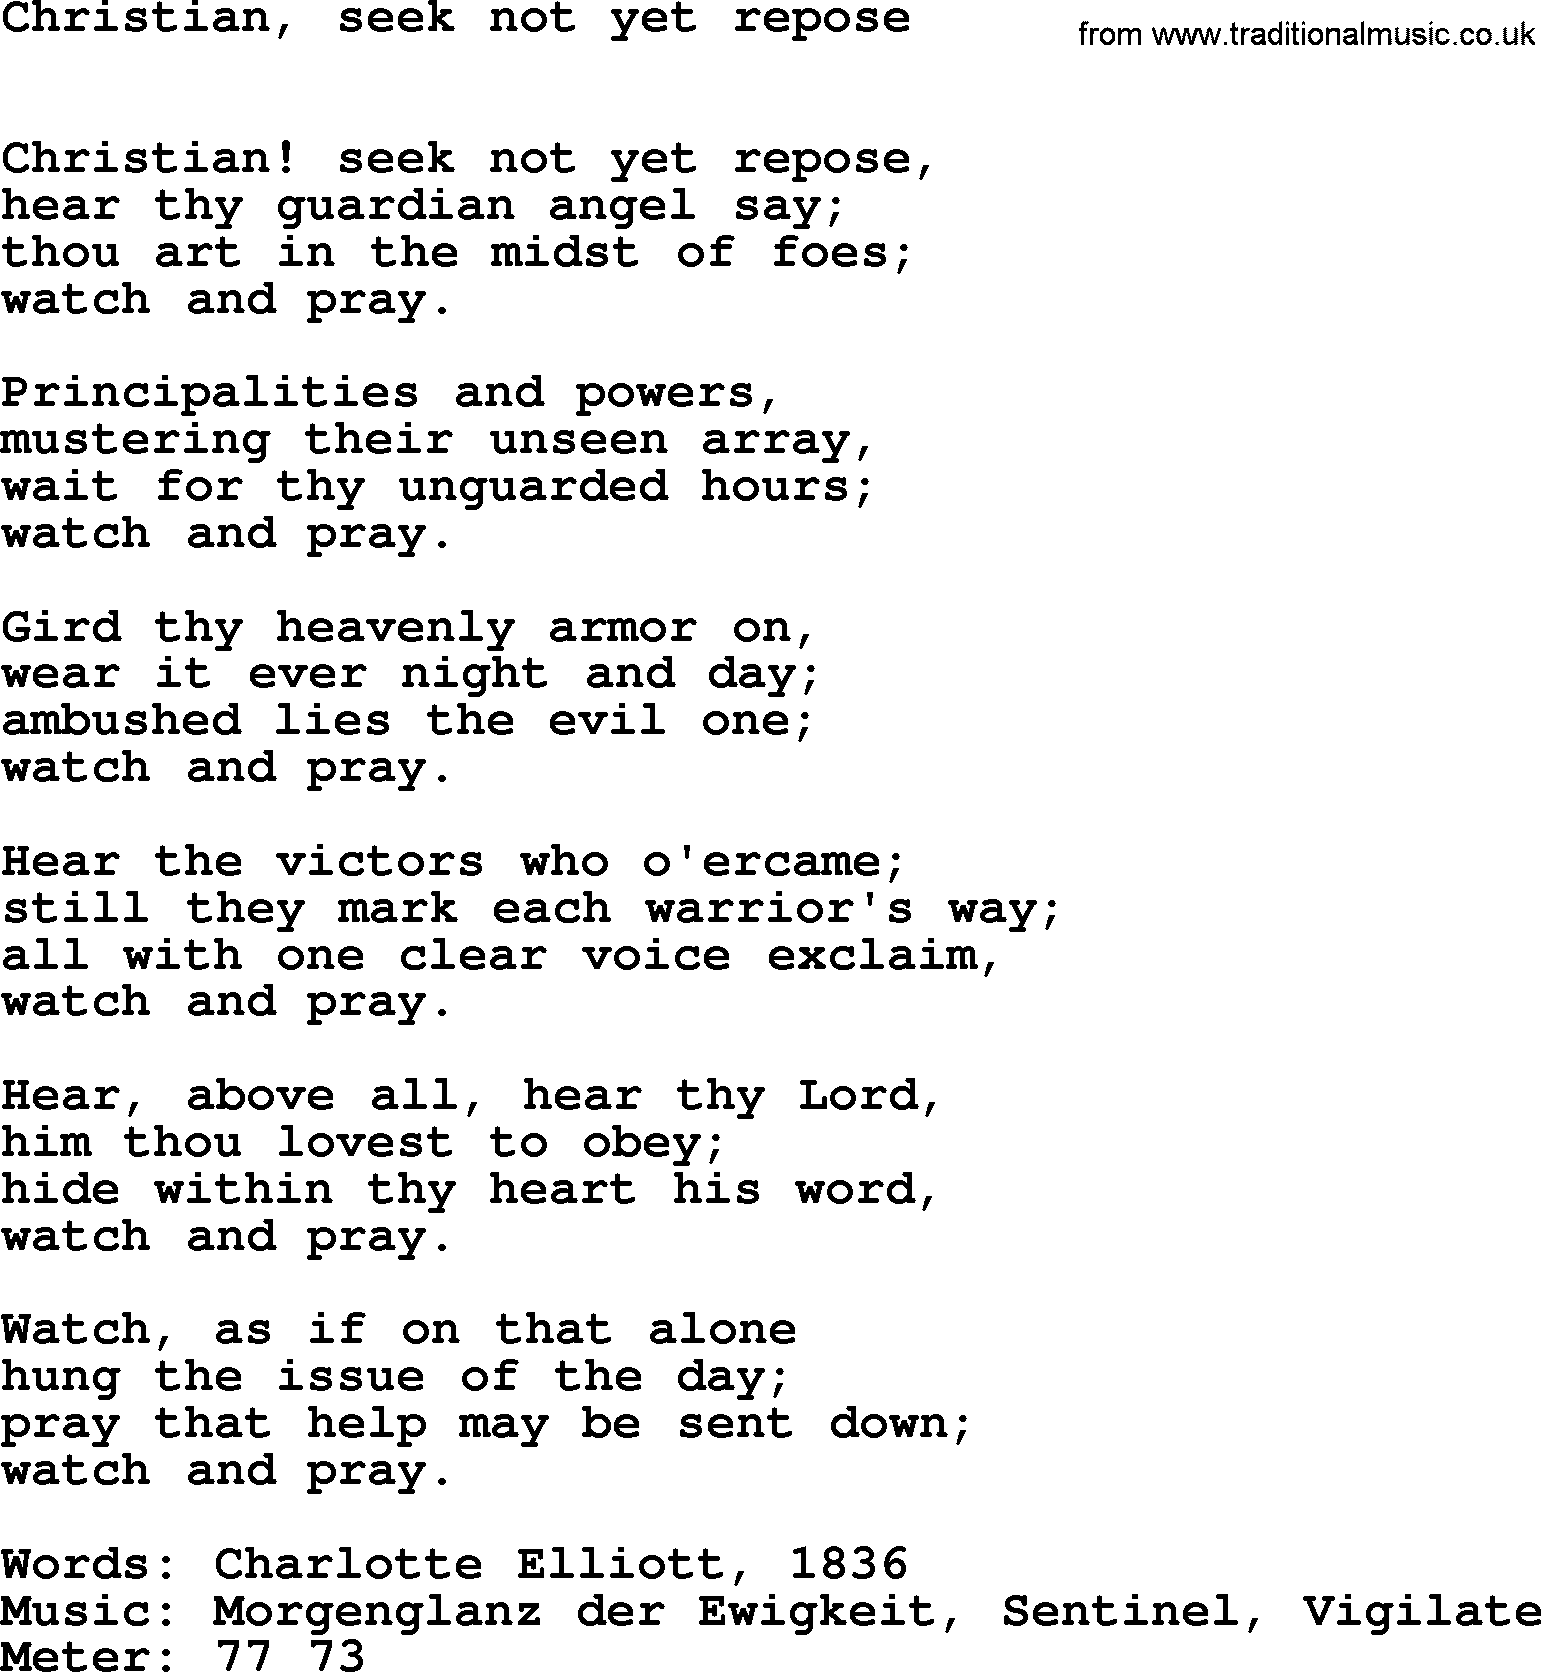 Book of Common Praise Hymn: Christian, Seek Not Yet Repose.txt lyrics with midi music